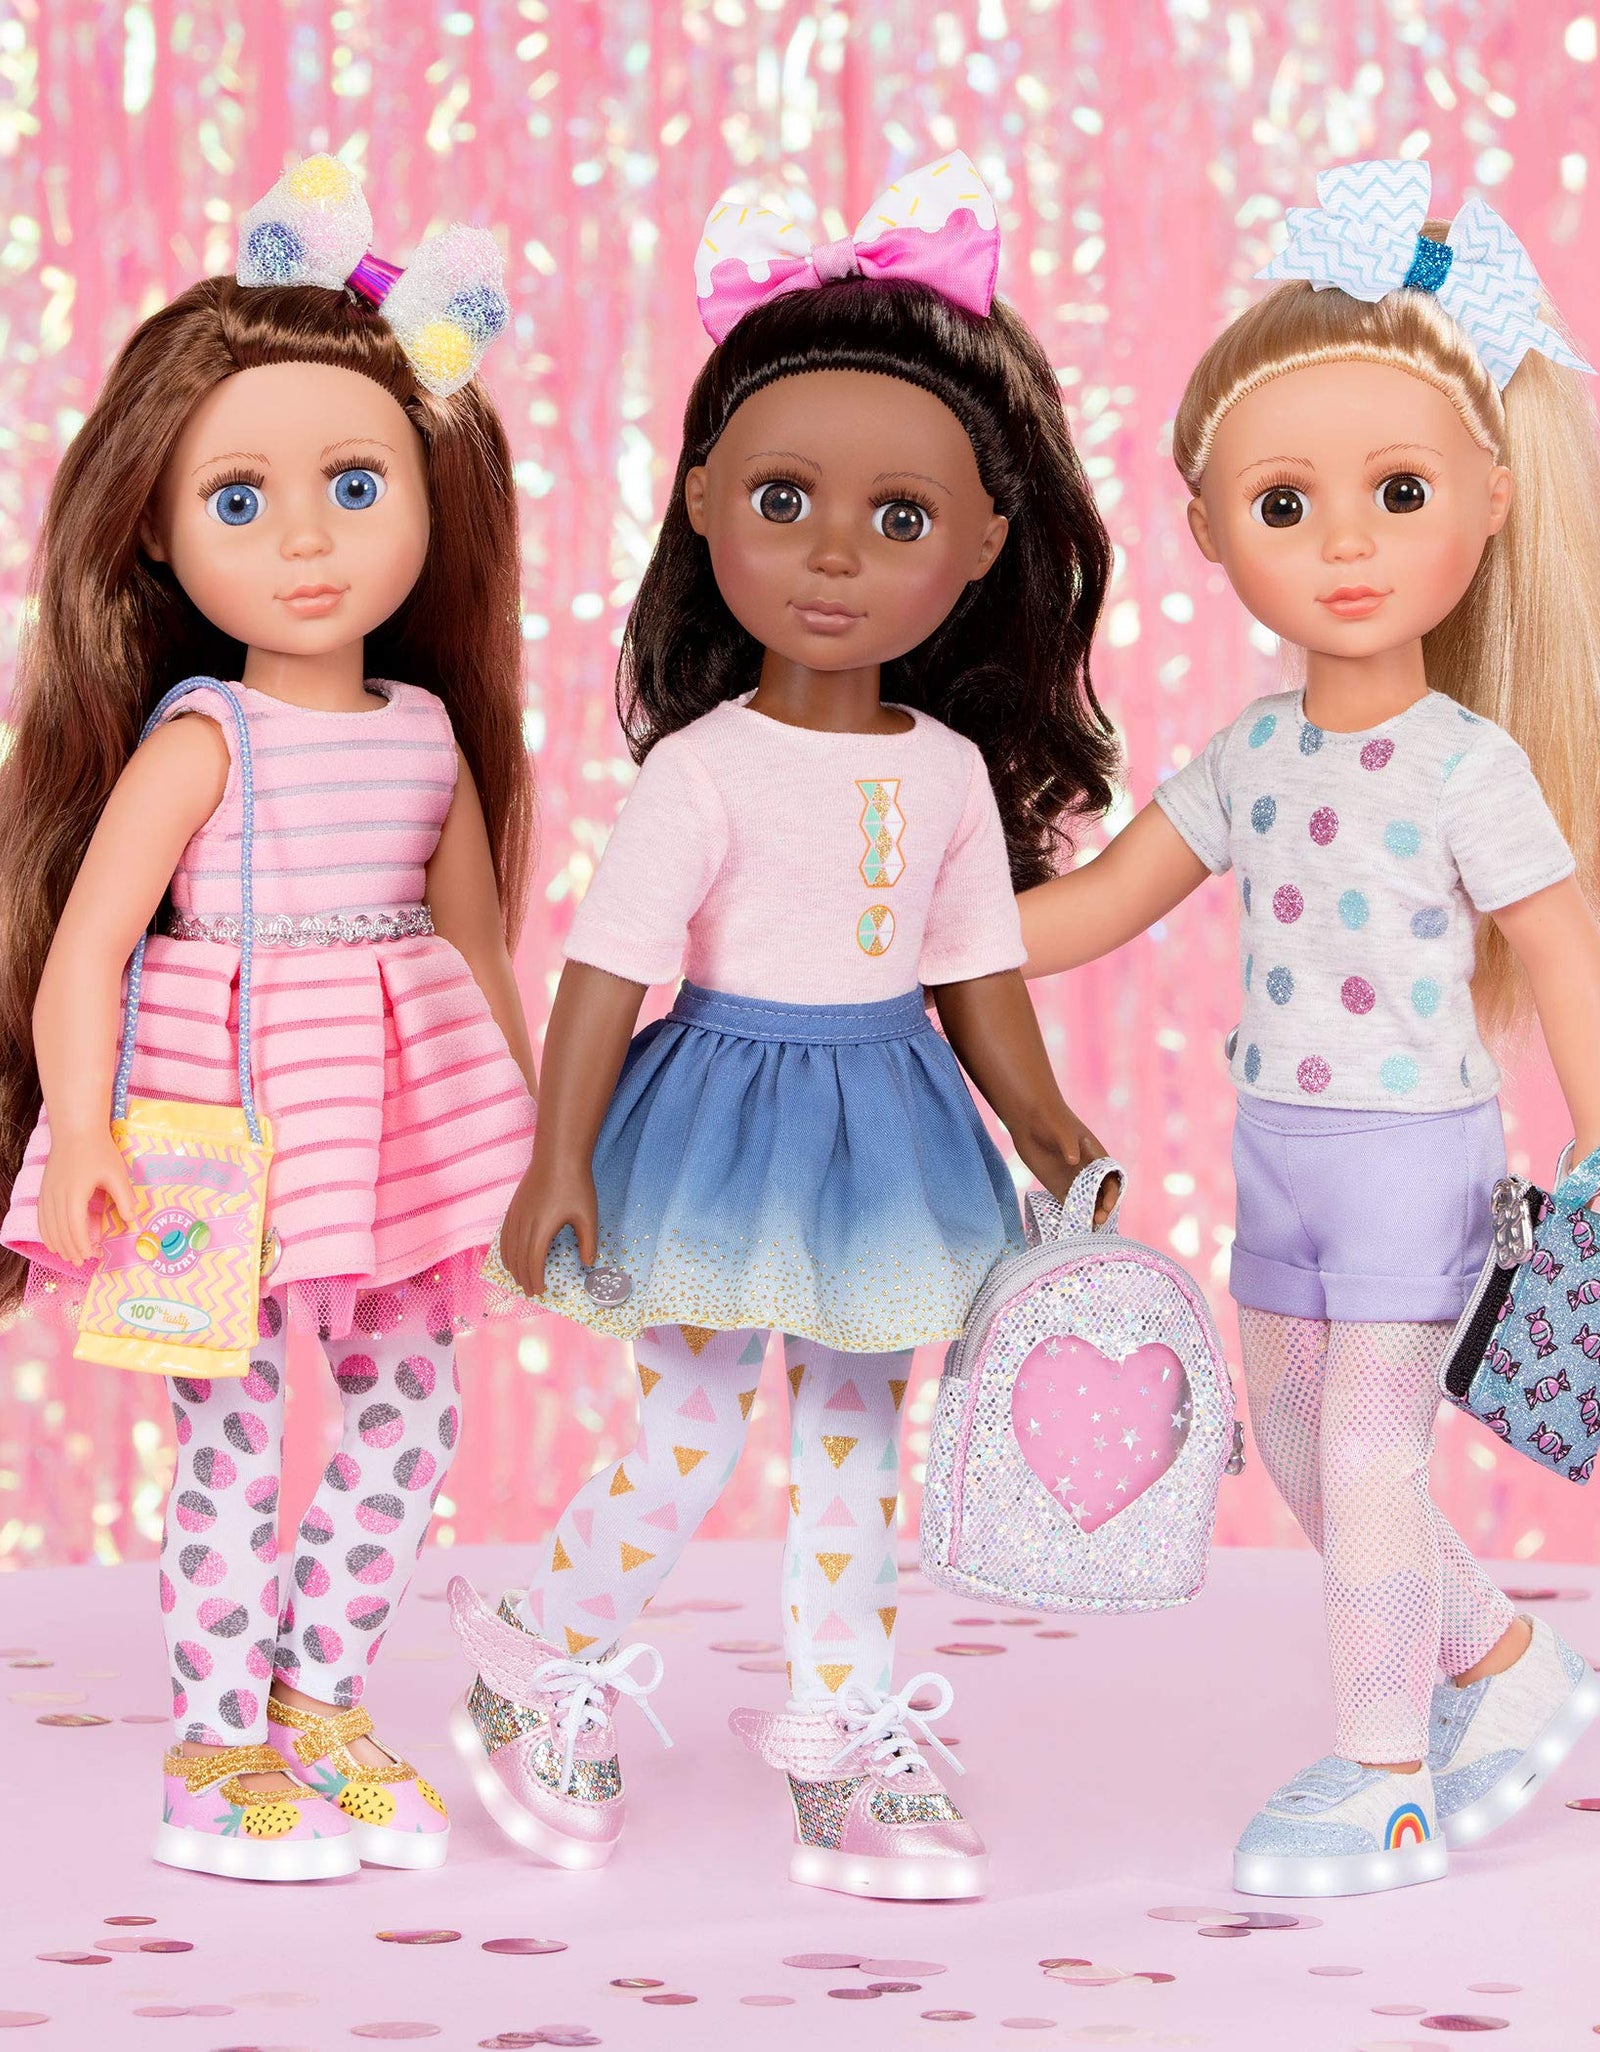 Glitter Girls Dolls by Battat - Bluebell 14" Poseable Fashion Doll - Dolls for Girls Age 3 & Up